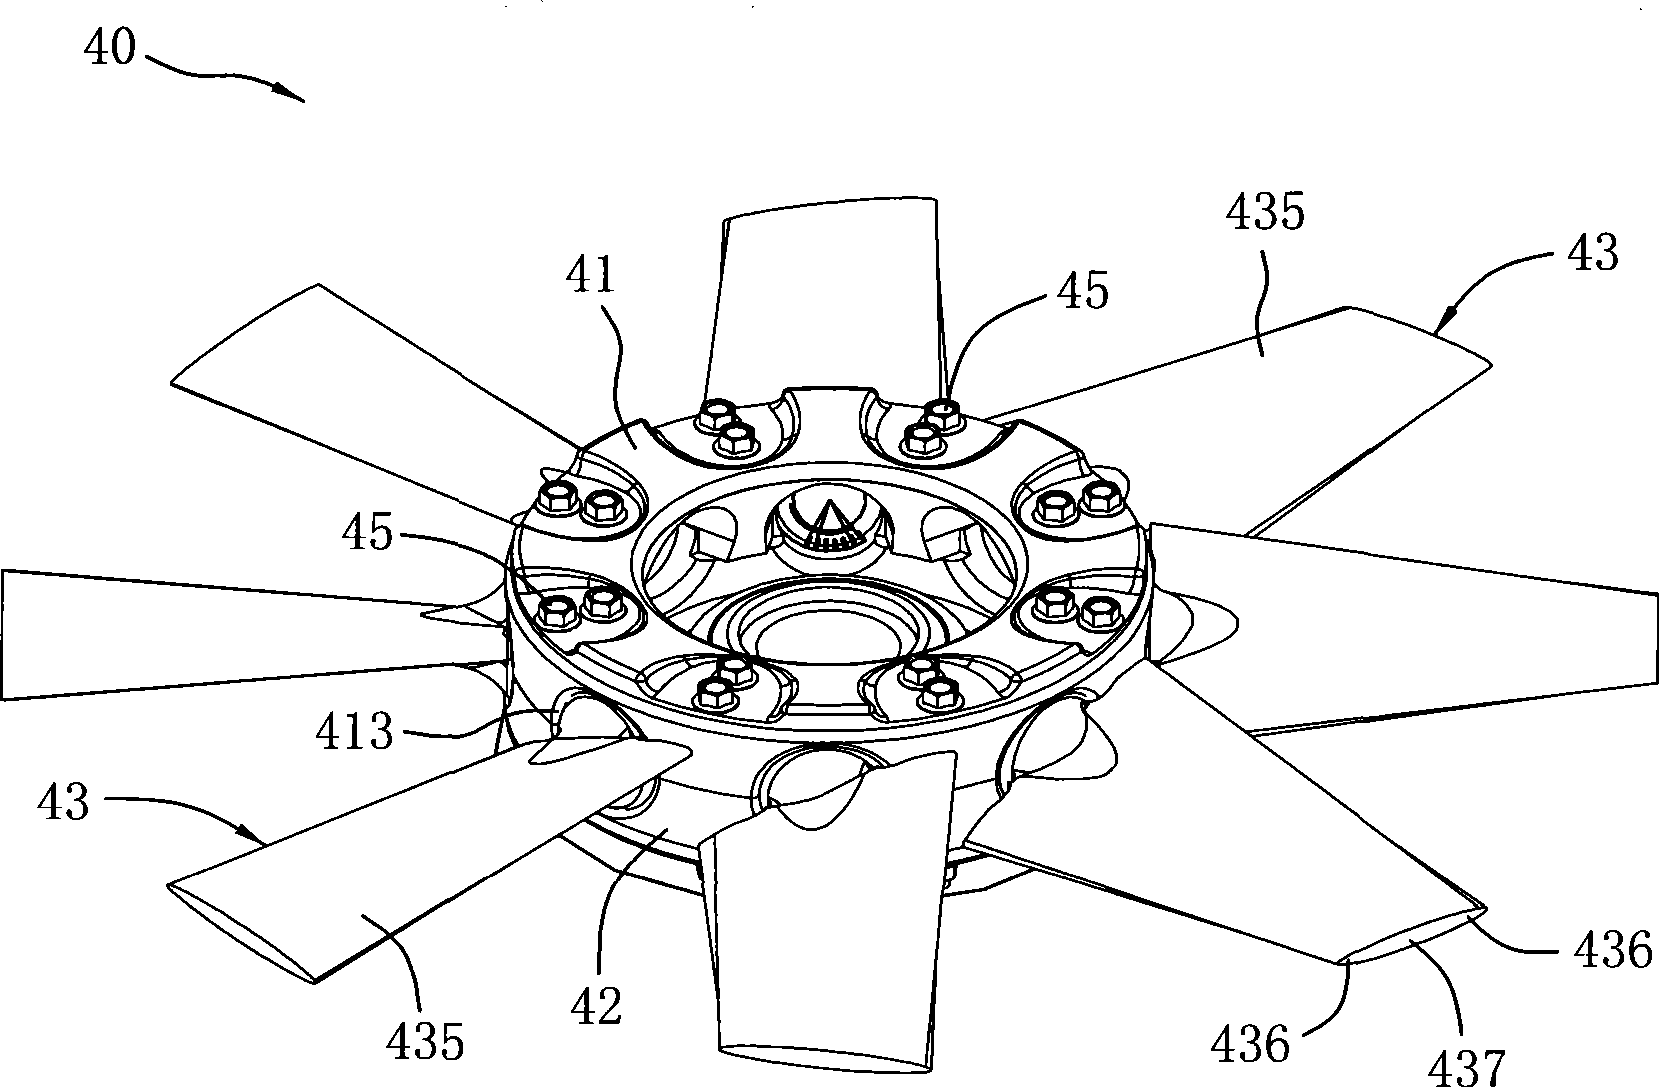 Impeller structure of ventilator